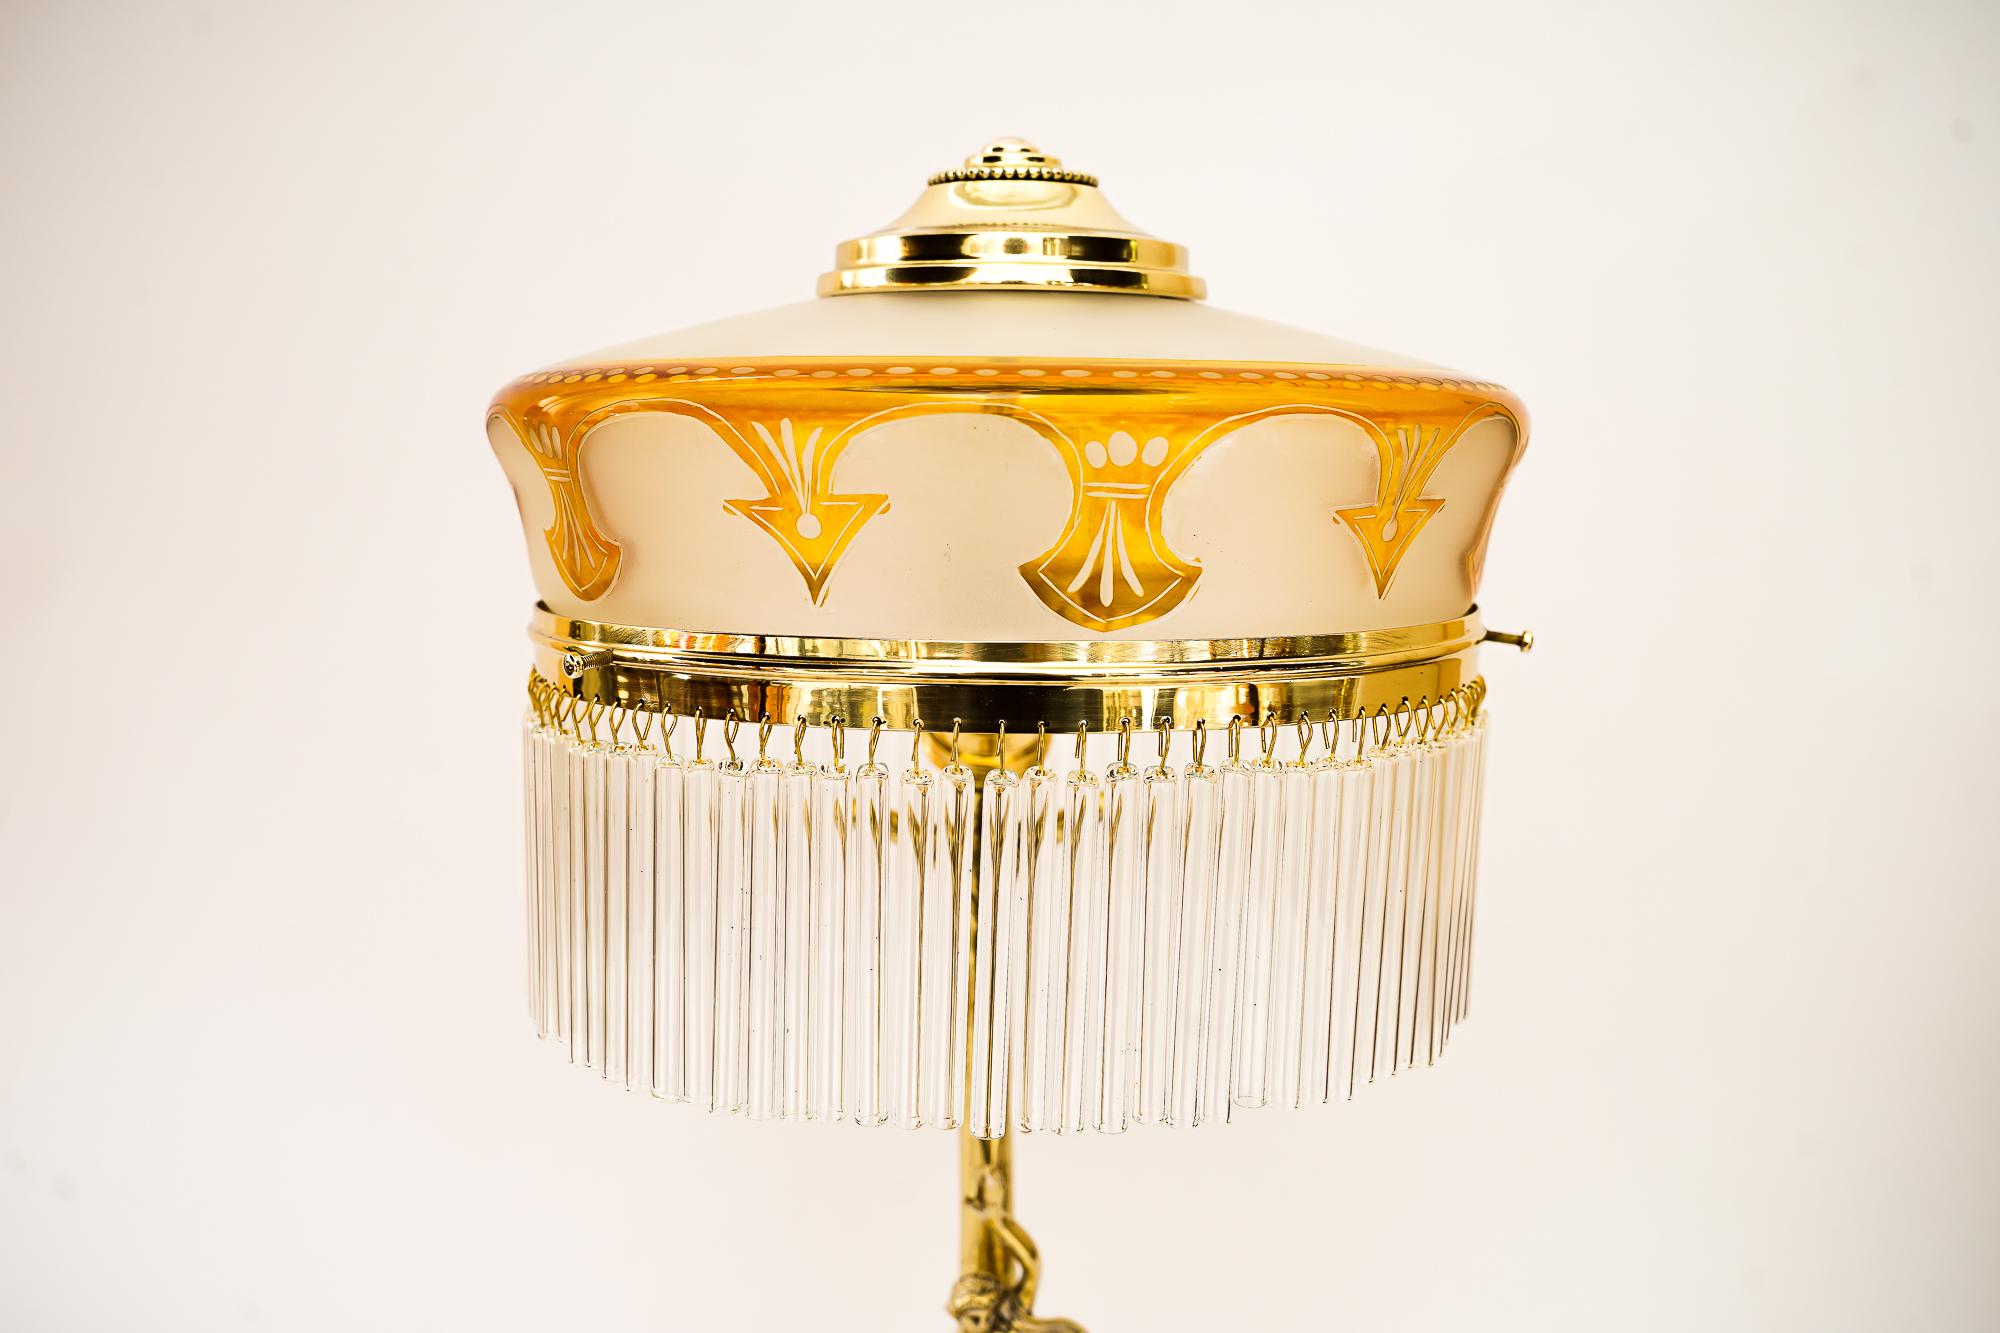 Austrian Jugendstil Table Lamp with Original Antique Glass Shade, Vienna, Around 1910s For Sale